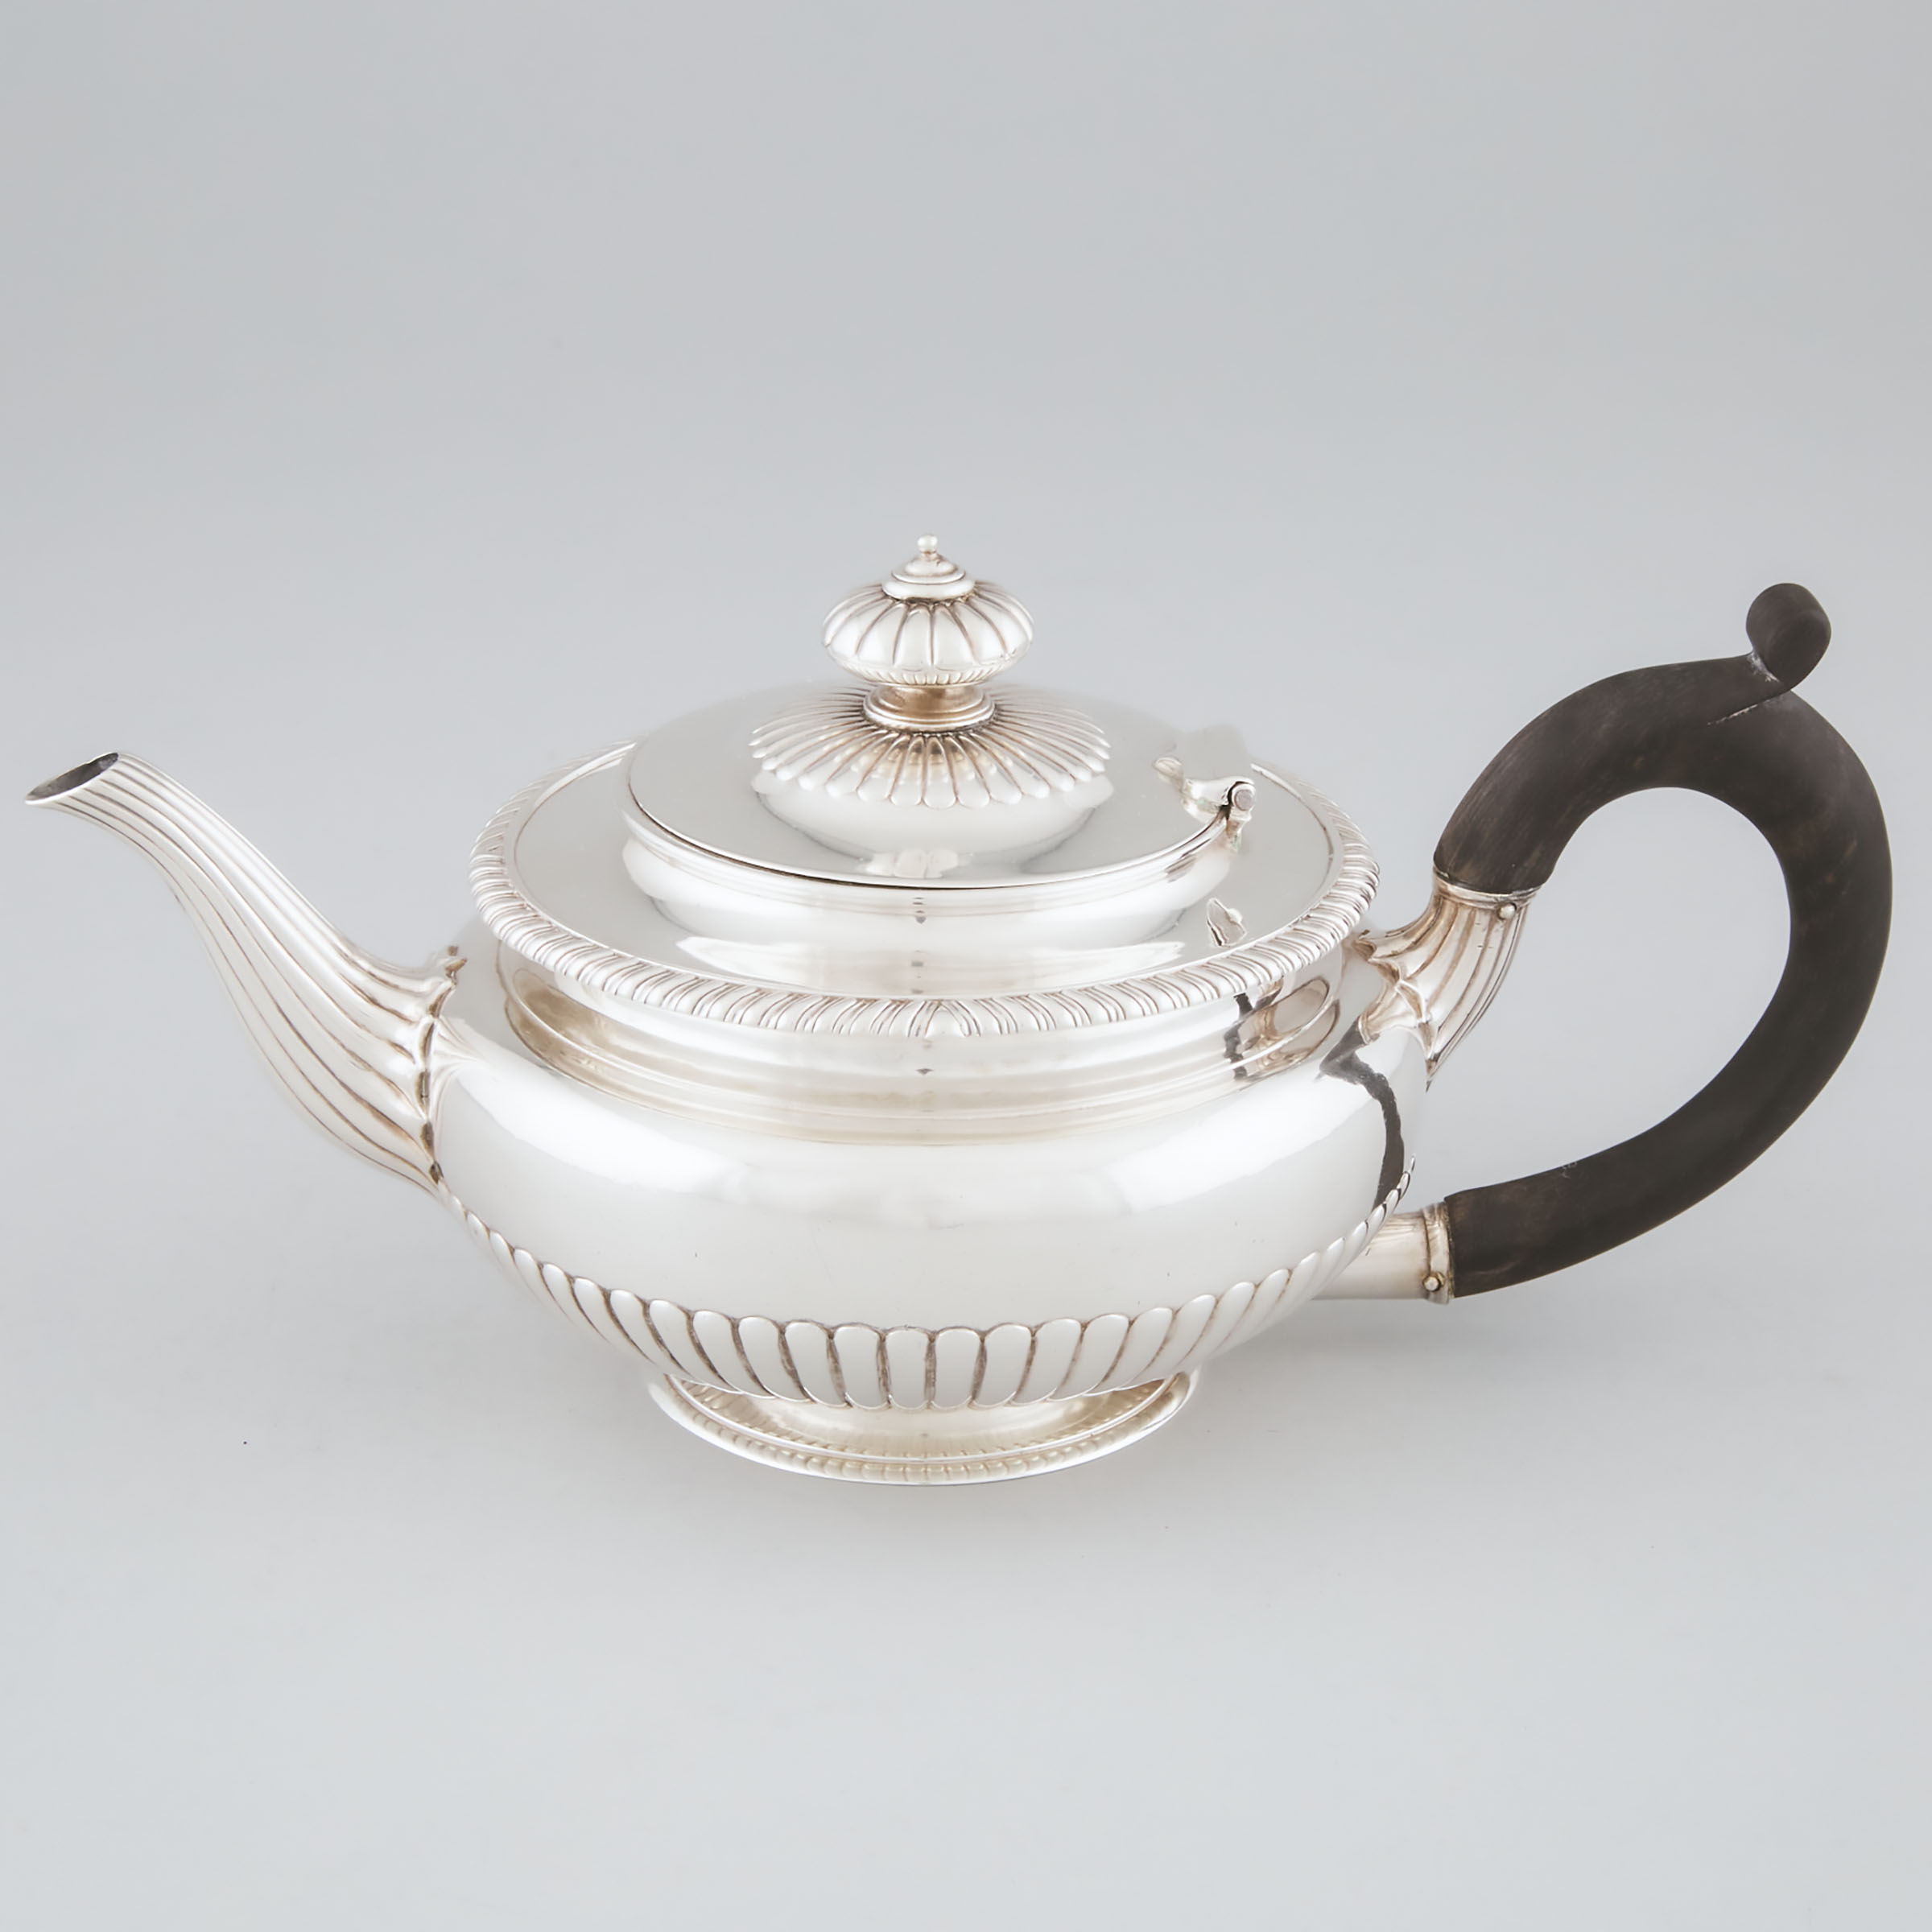 George IV Silver Teapot Paul Storr  2a5609